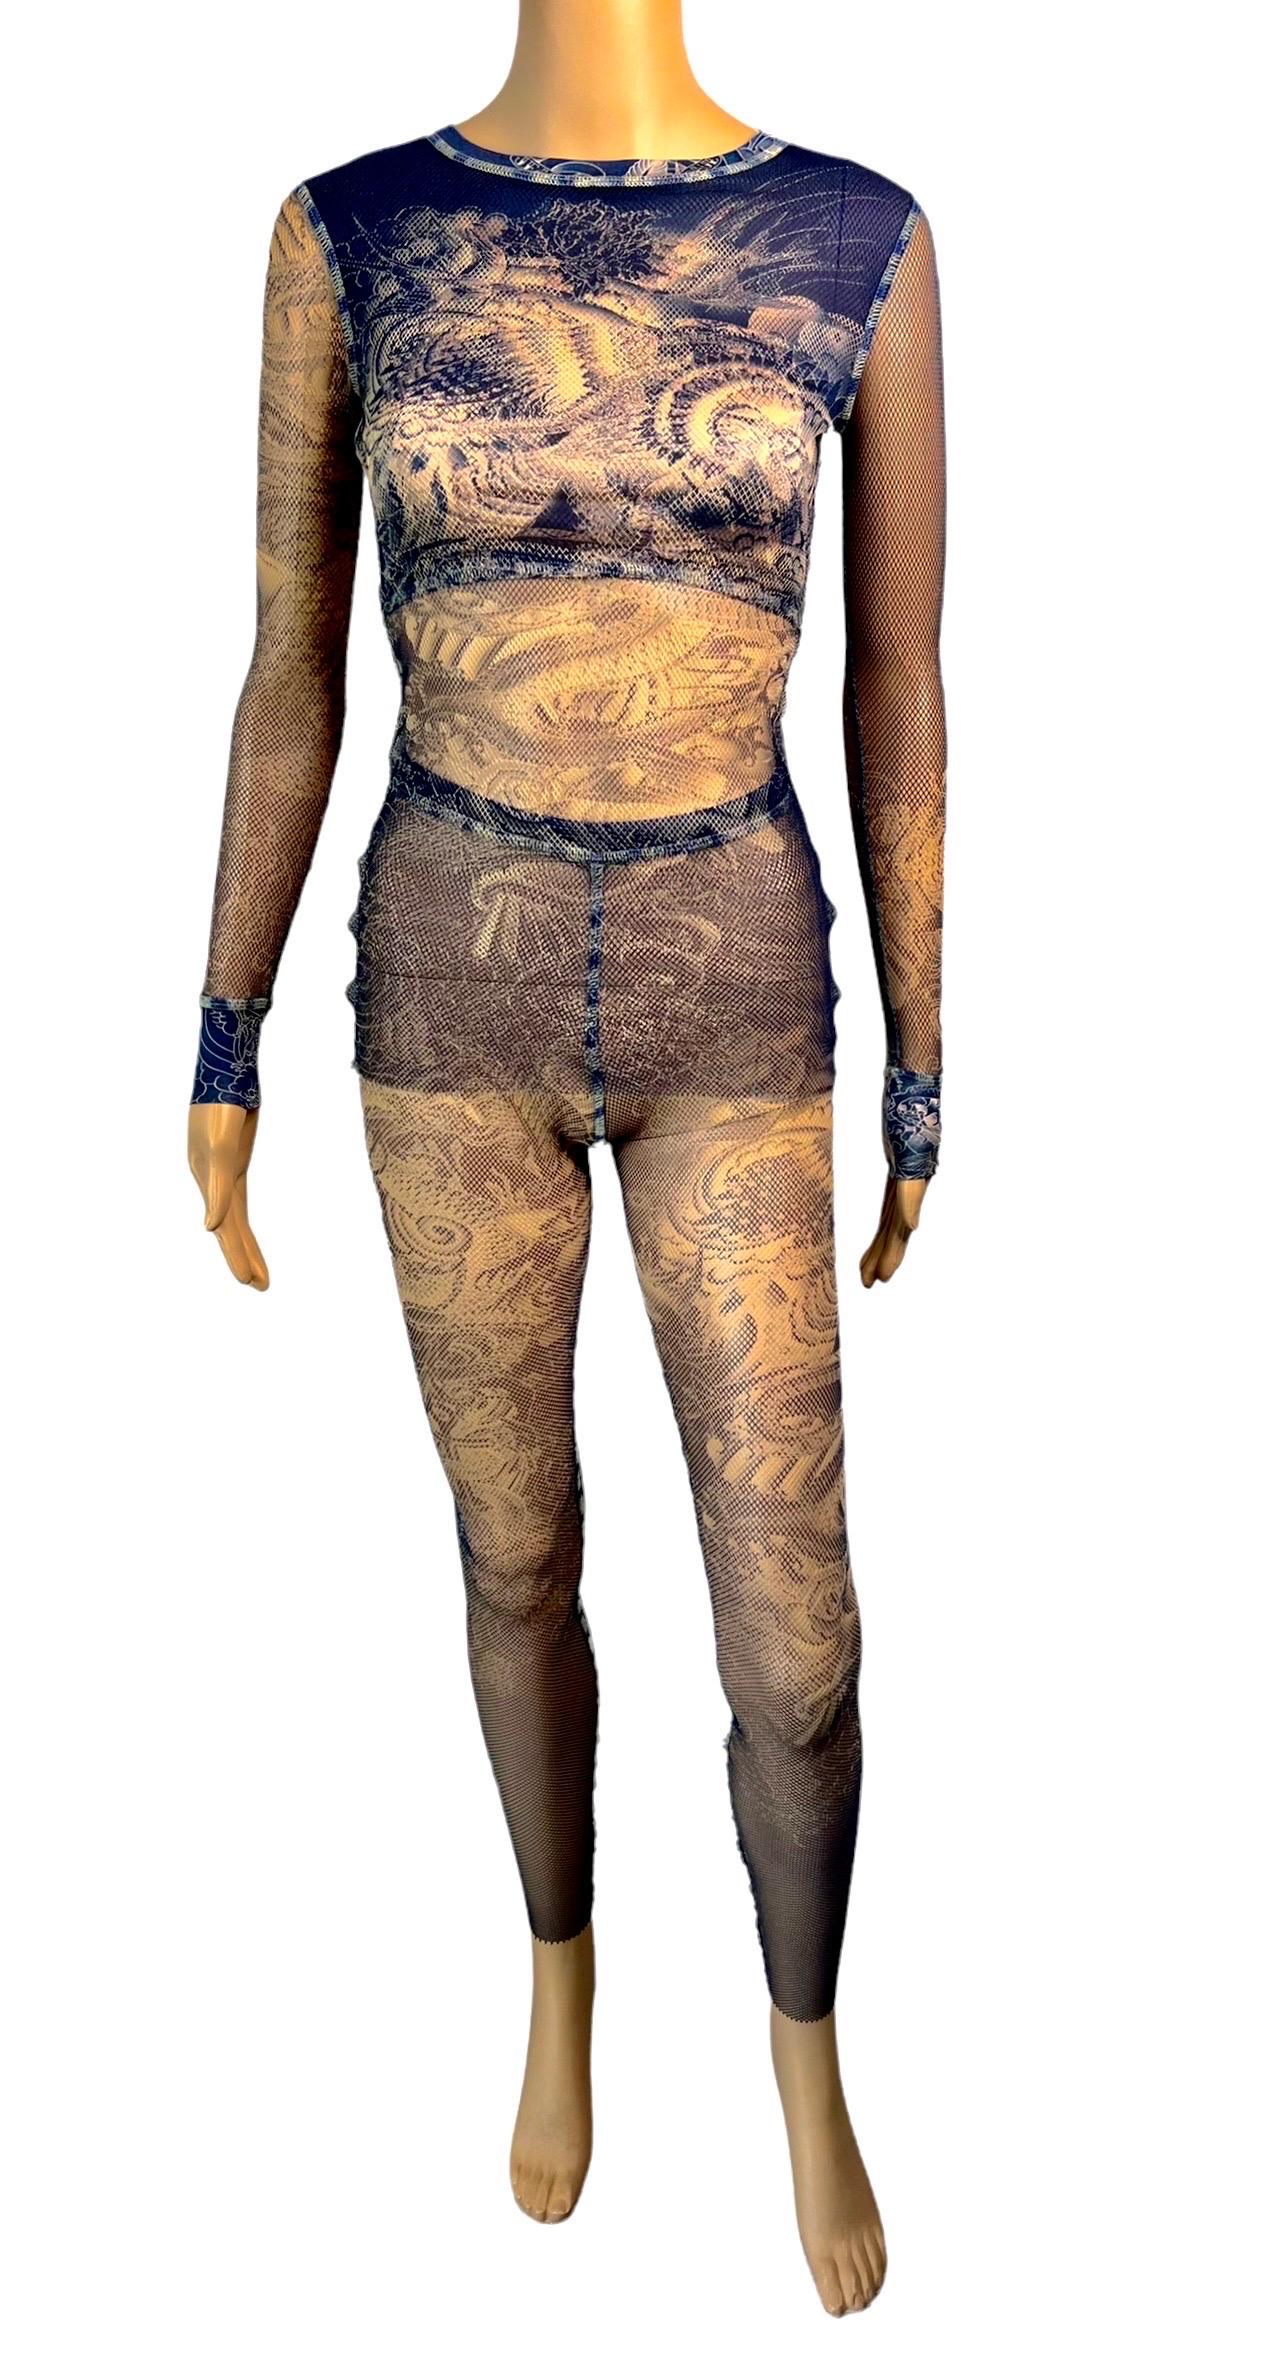 Jean Paul Gaultier Tattoo Print Sheer Fishnet Mesh Top & Leggings Pants 2 Piece Set Size XS